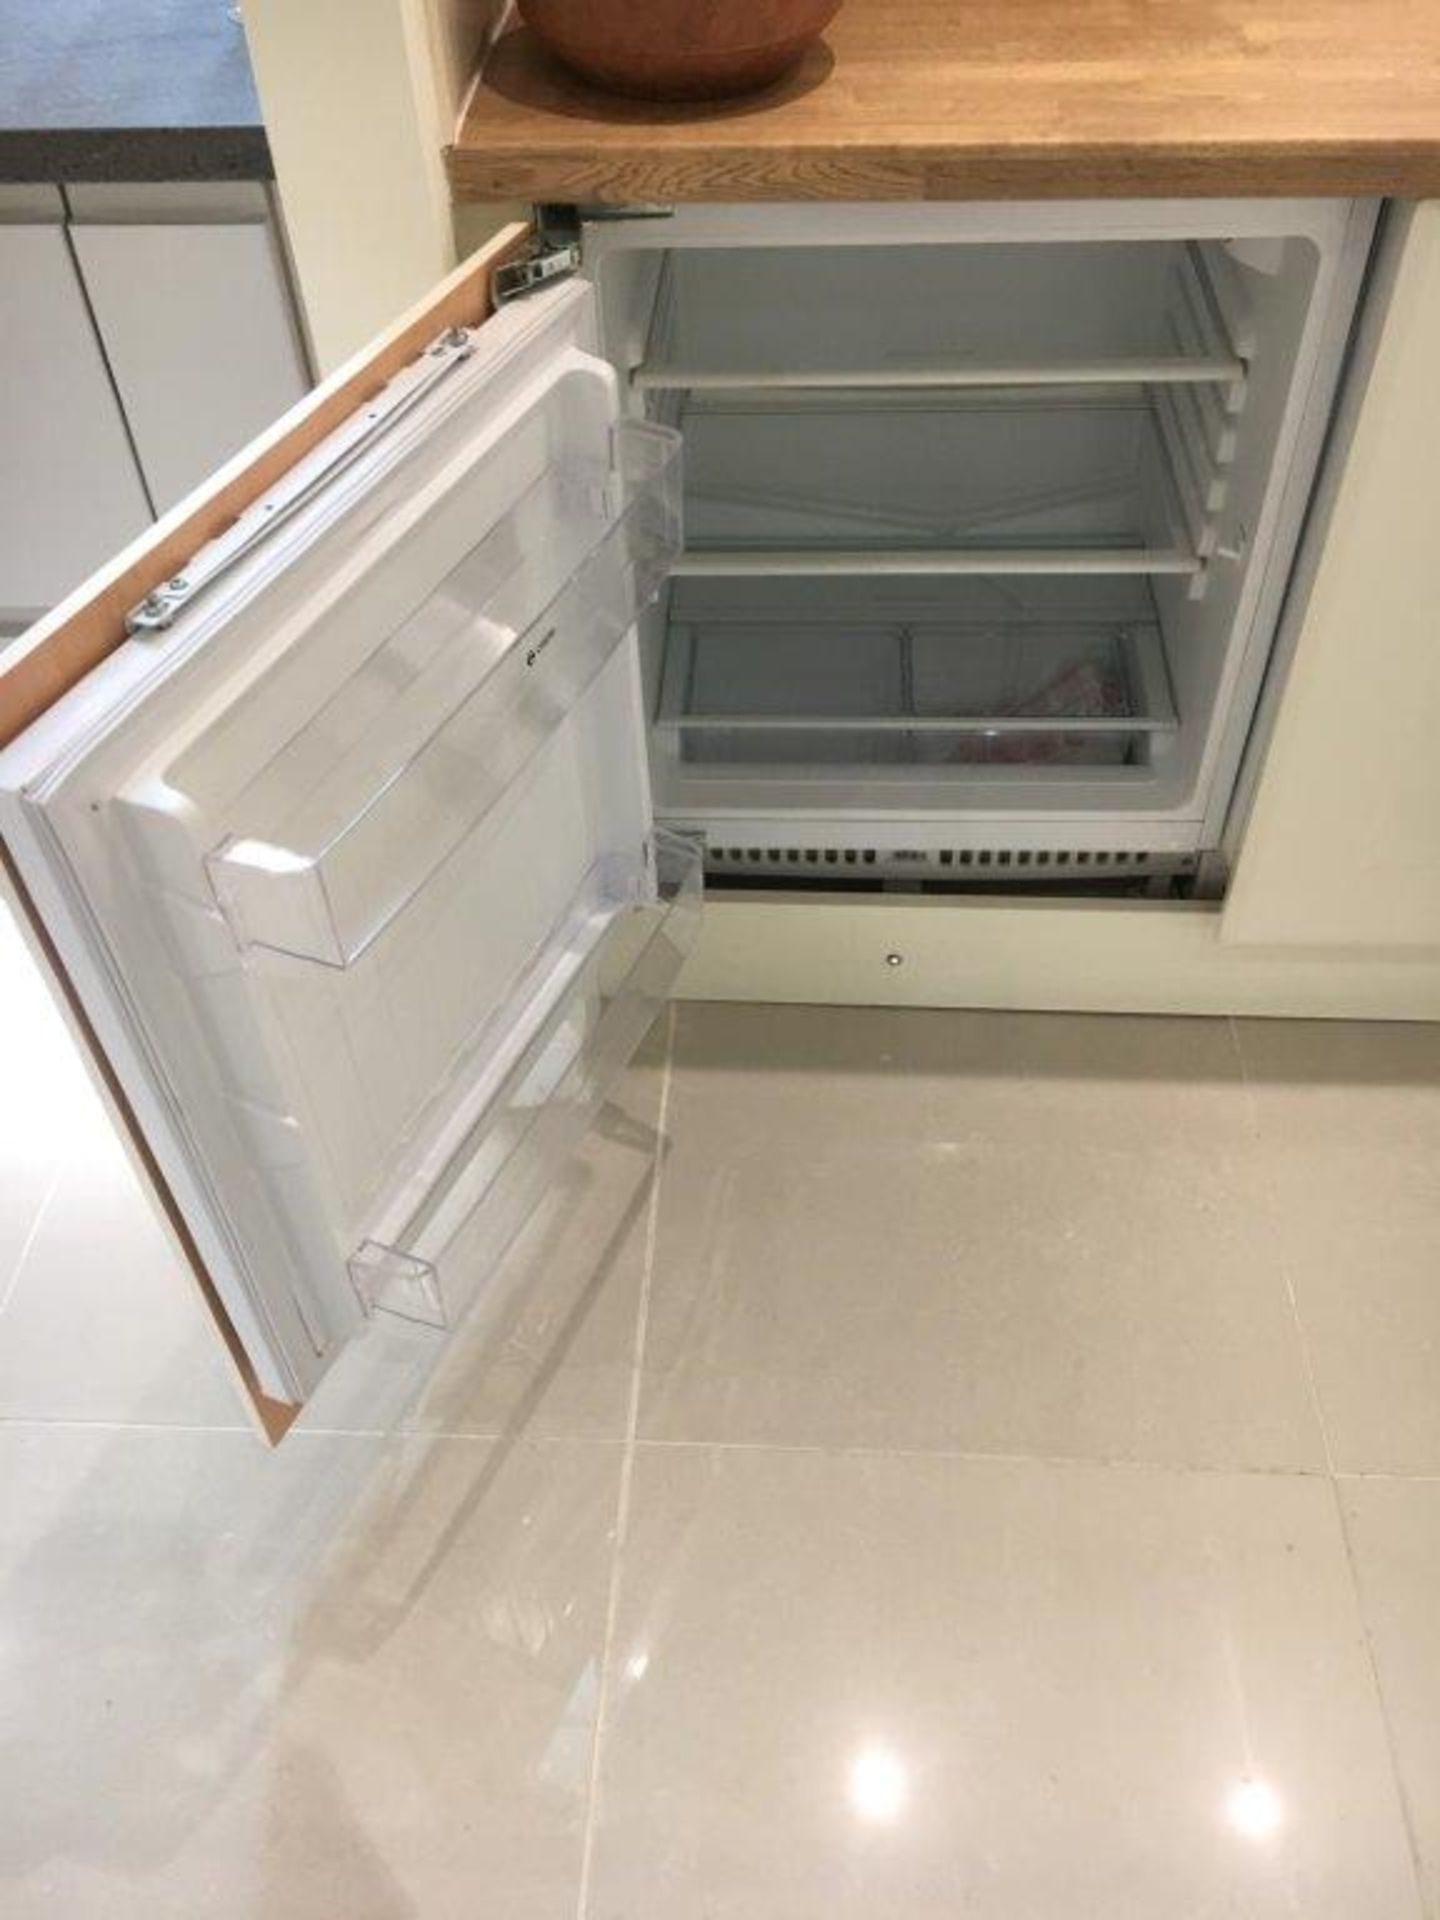 Caple built-under integrated fridge model RBL3. IMPORTANT: Please remember goods successfully bid